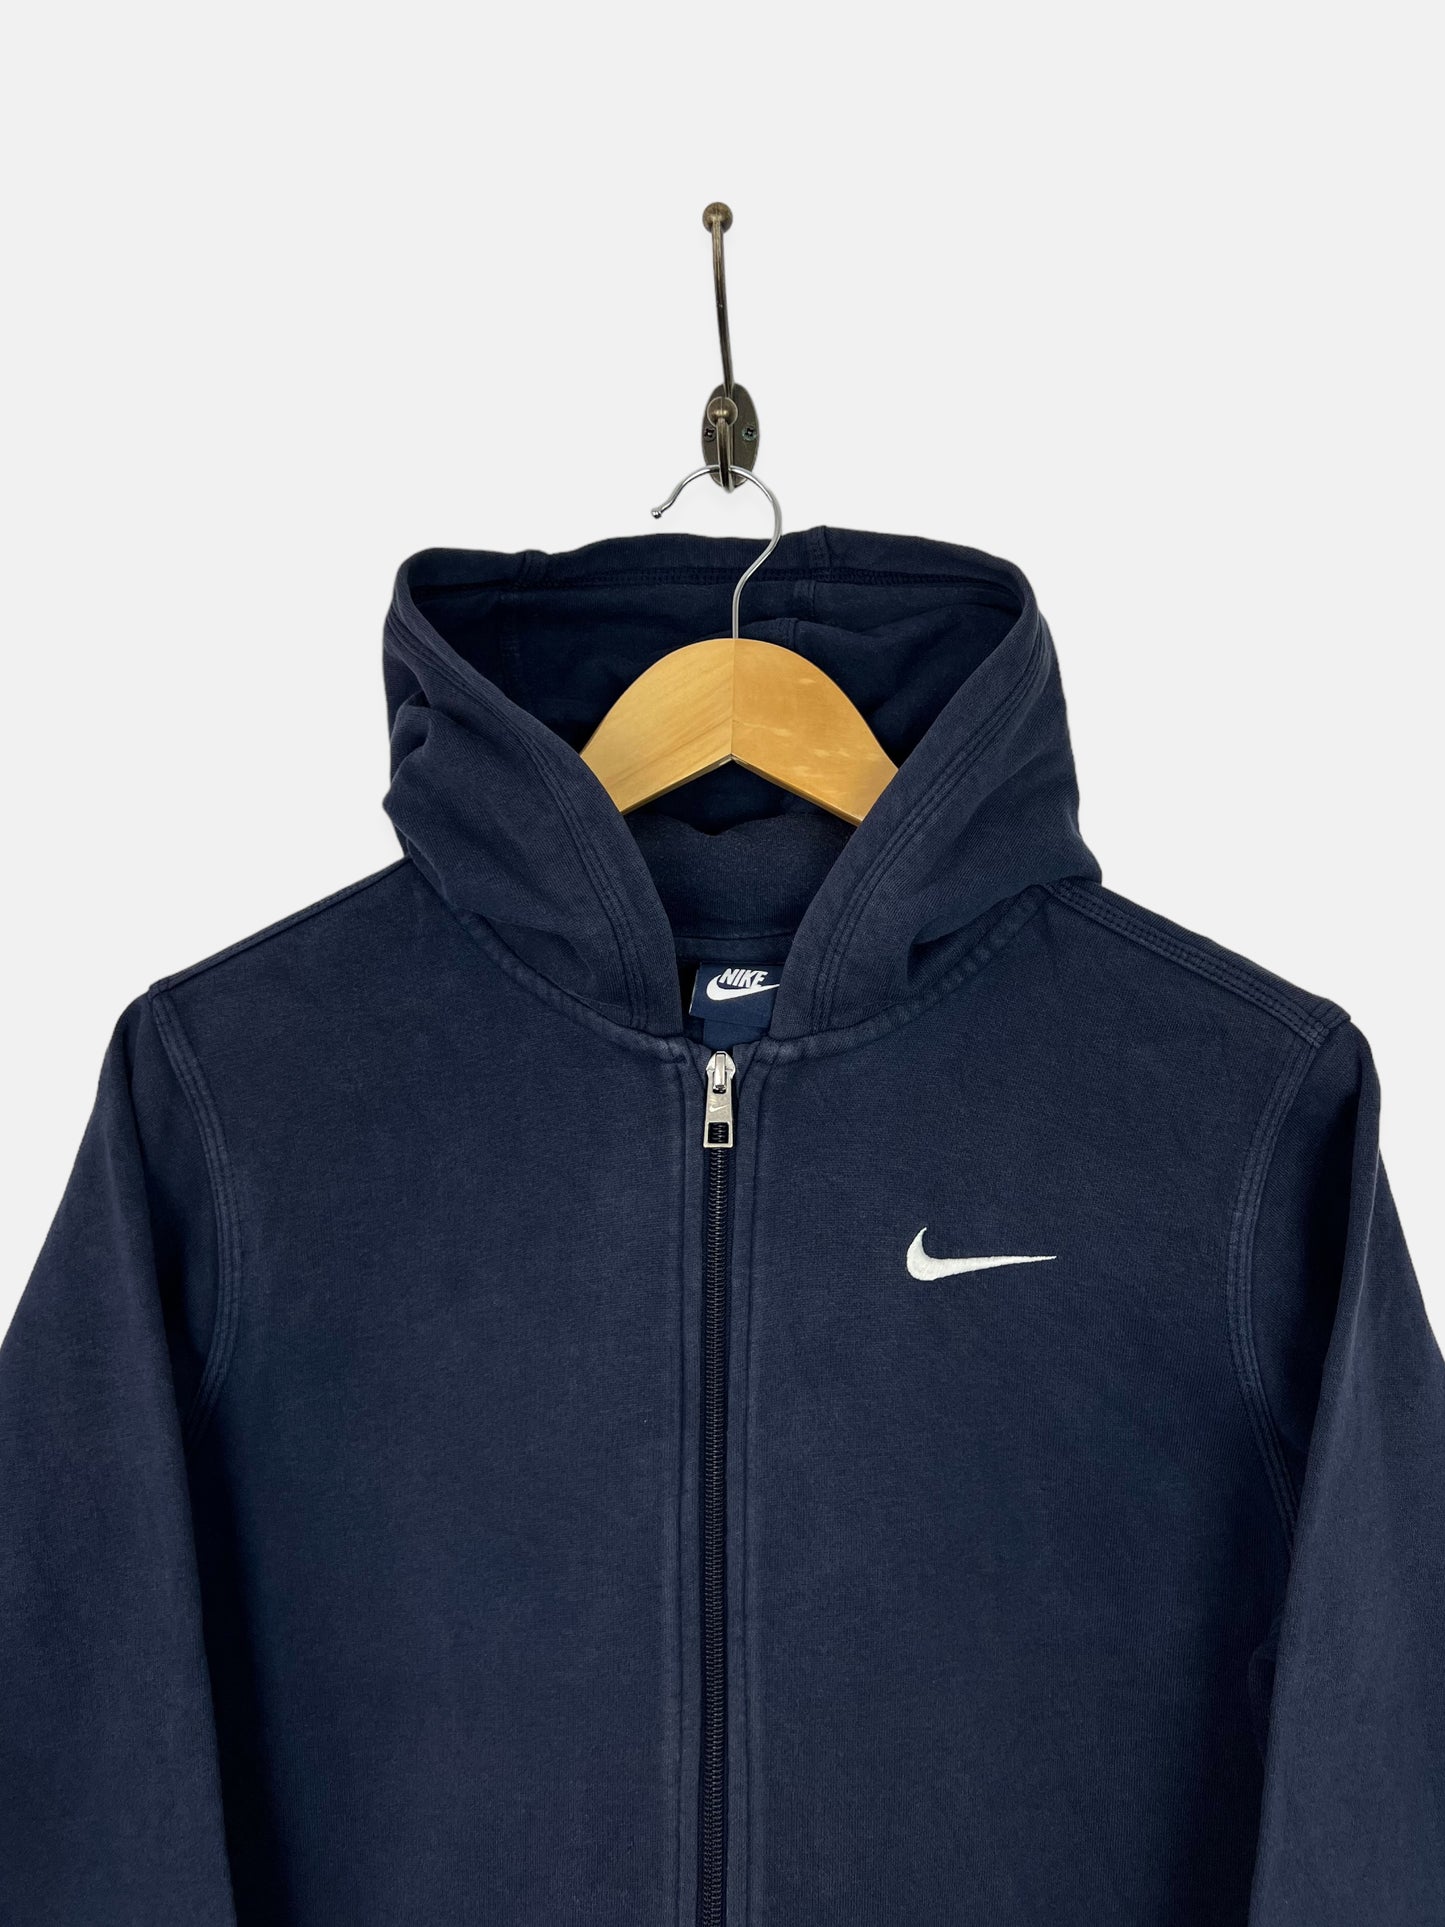 Nike Embroidered Vintage Zip-Up Hoodie Size 6-8